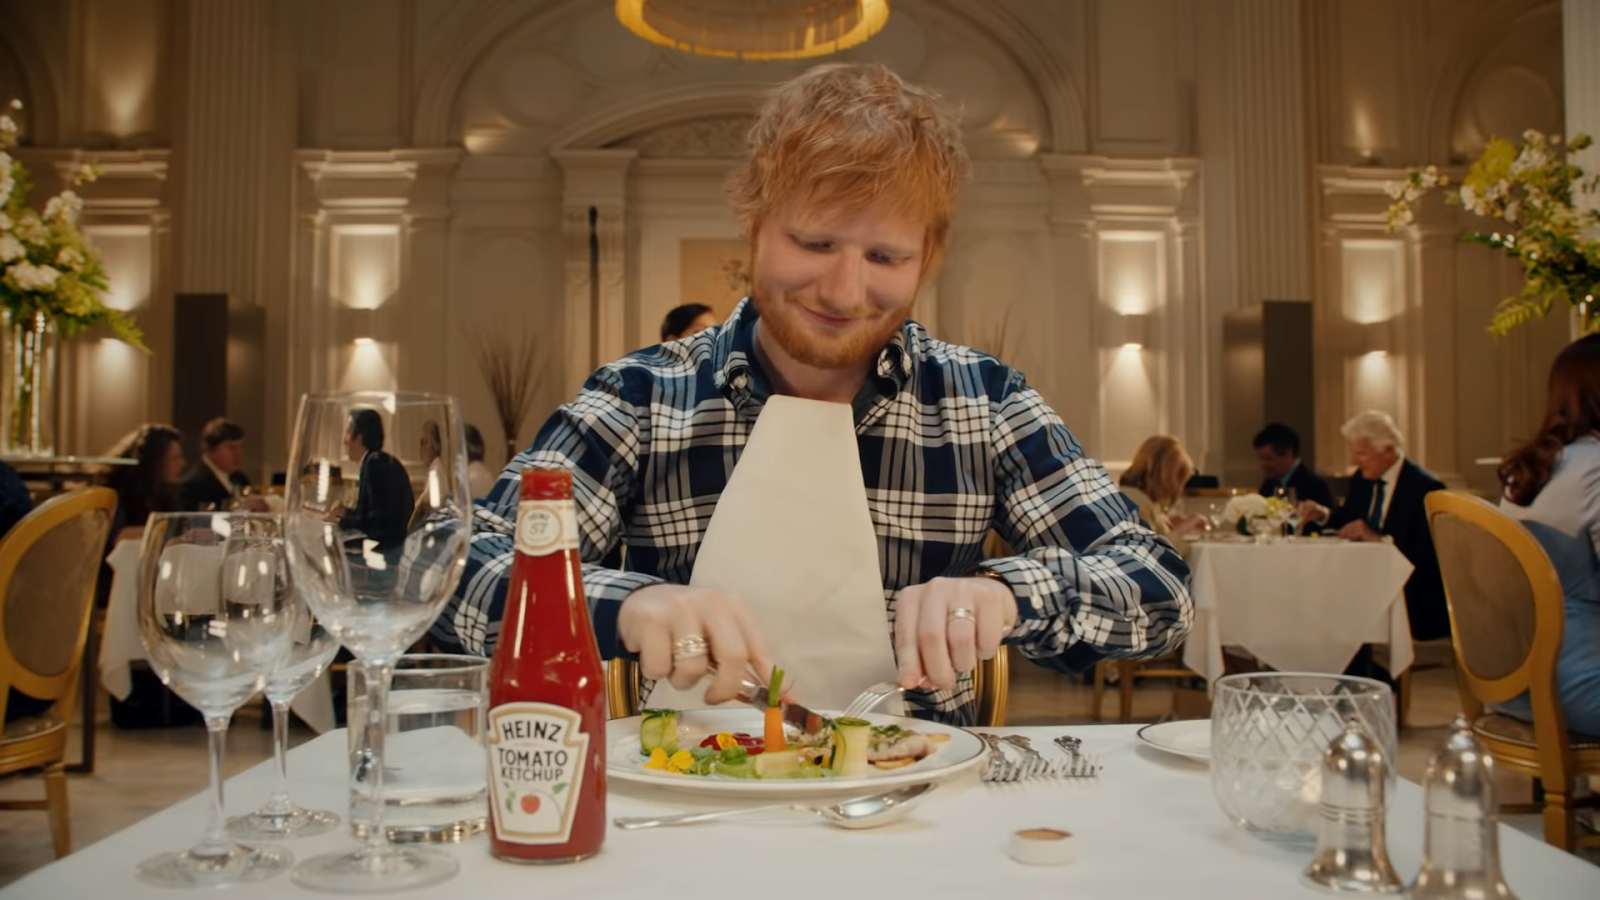 Ed Sheeran eating with Heinz ketchup